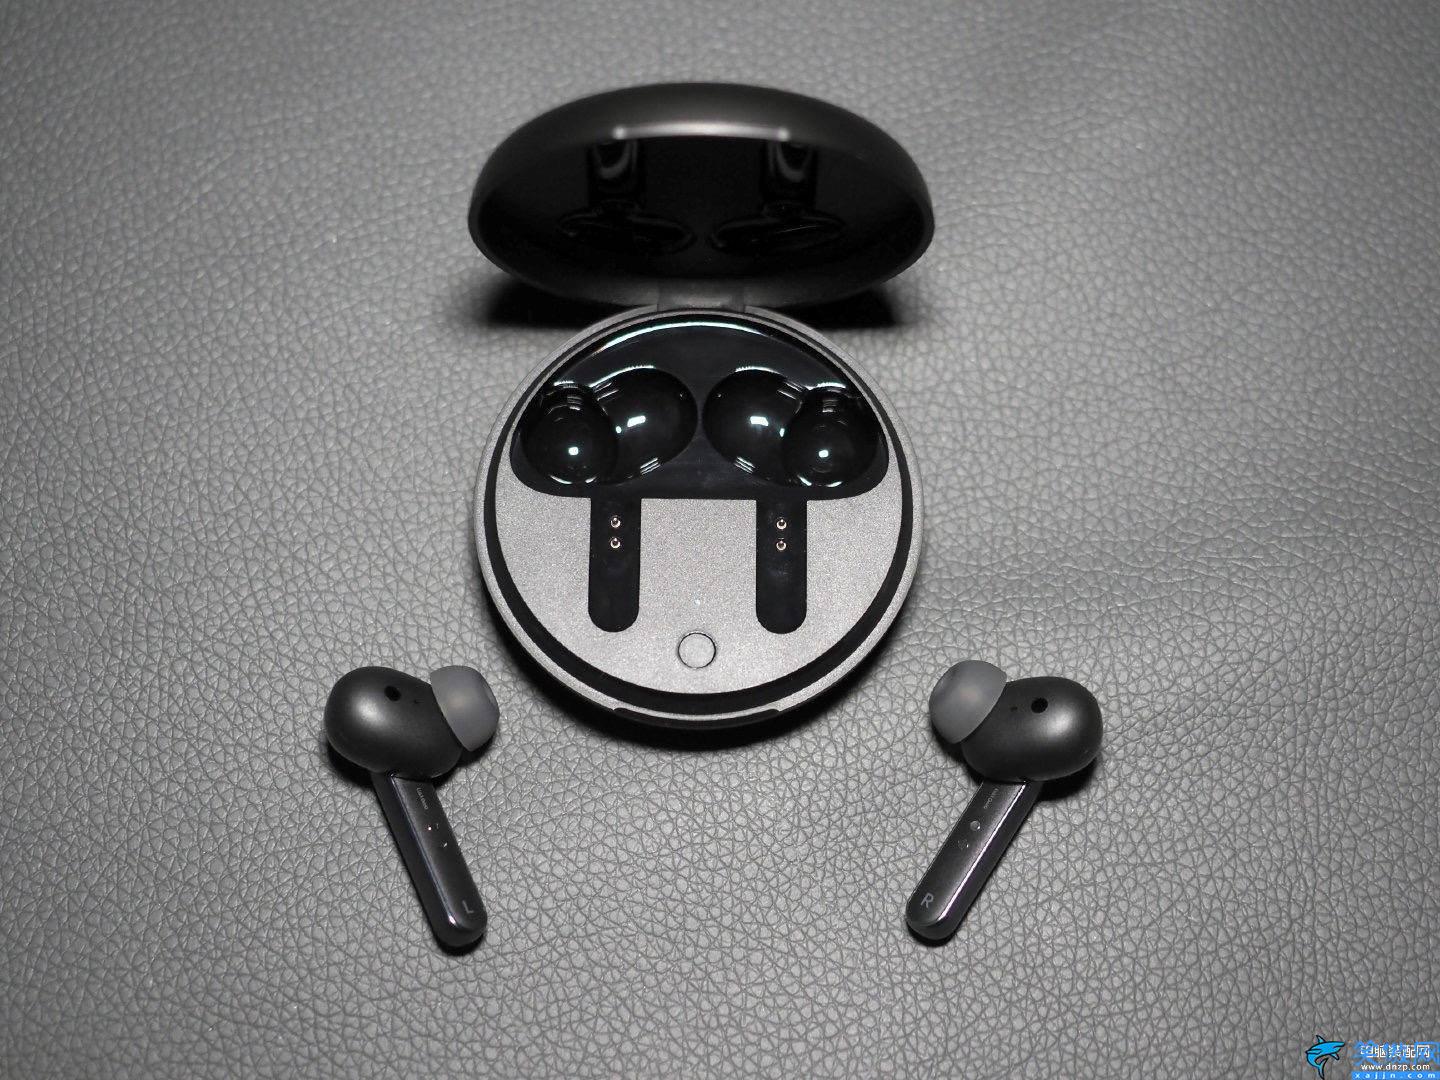 oppo蓝牙耳机使用说明图解,OPPO无线耳机的功能介绍